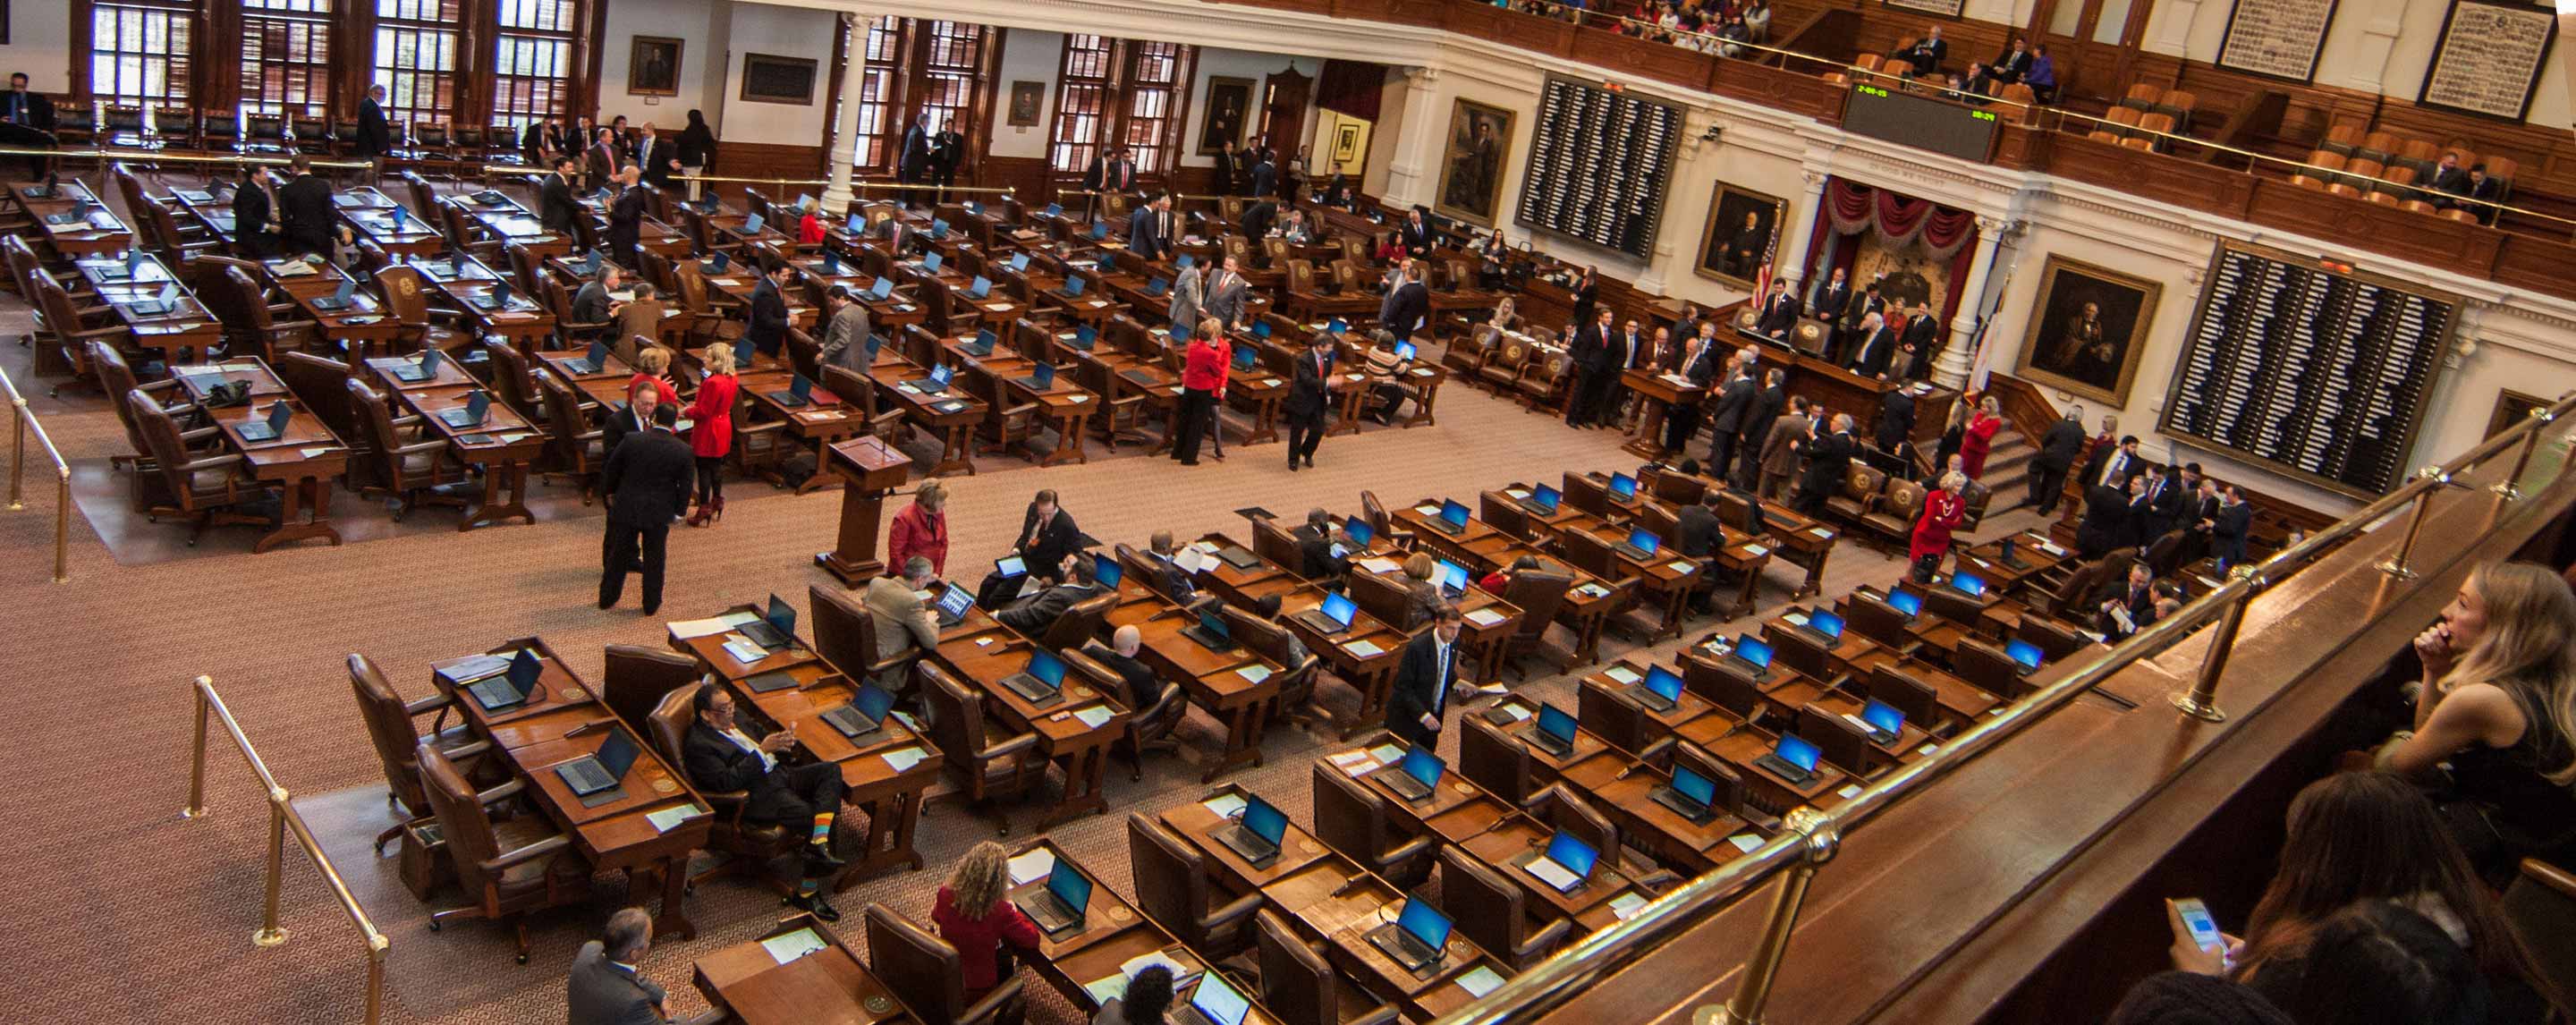 Floor of the Texas House of Representatives